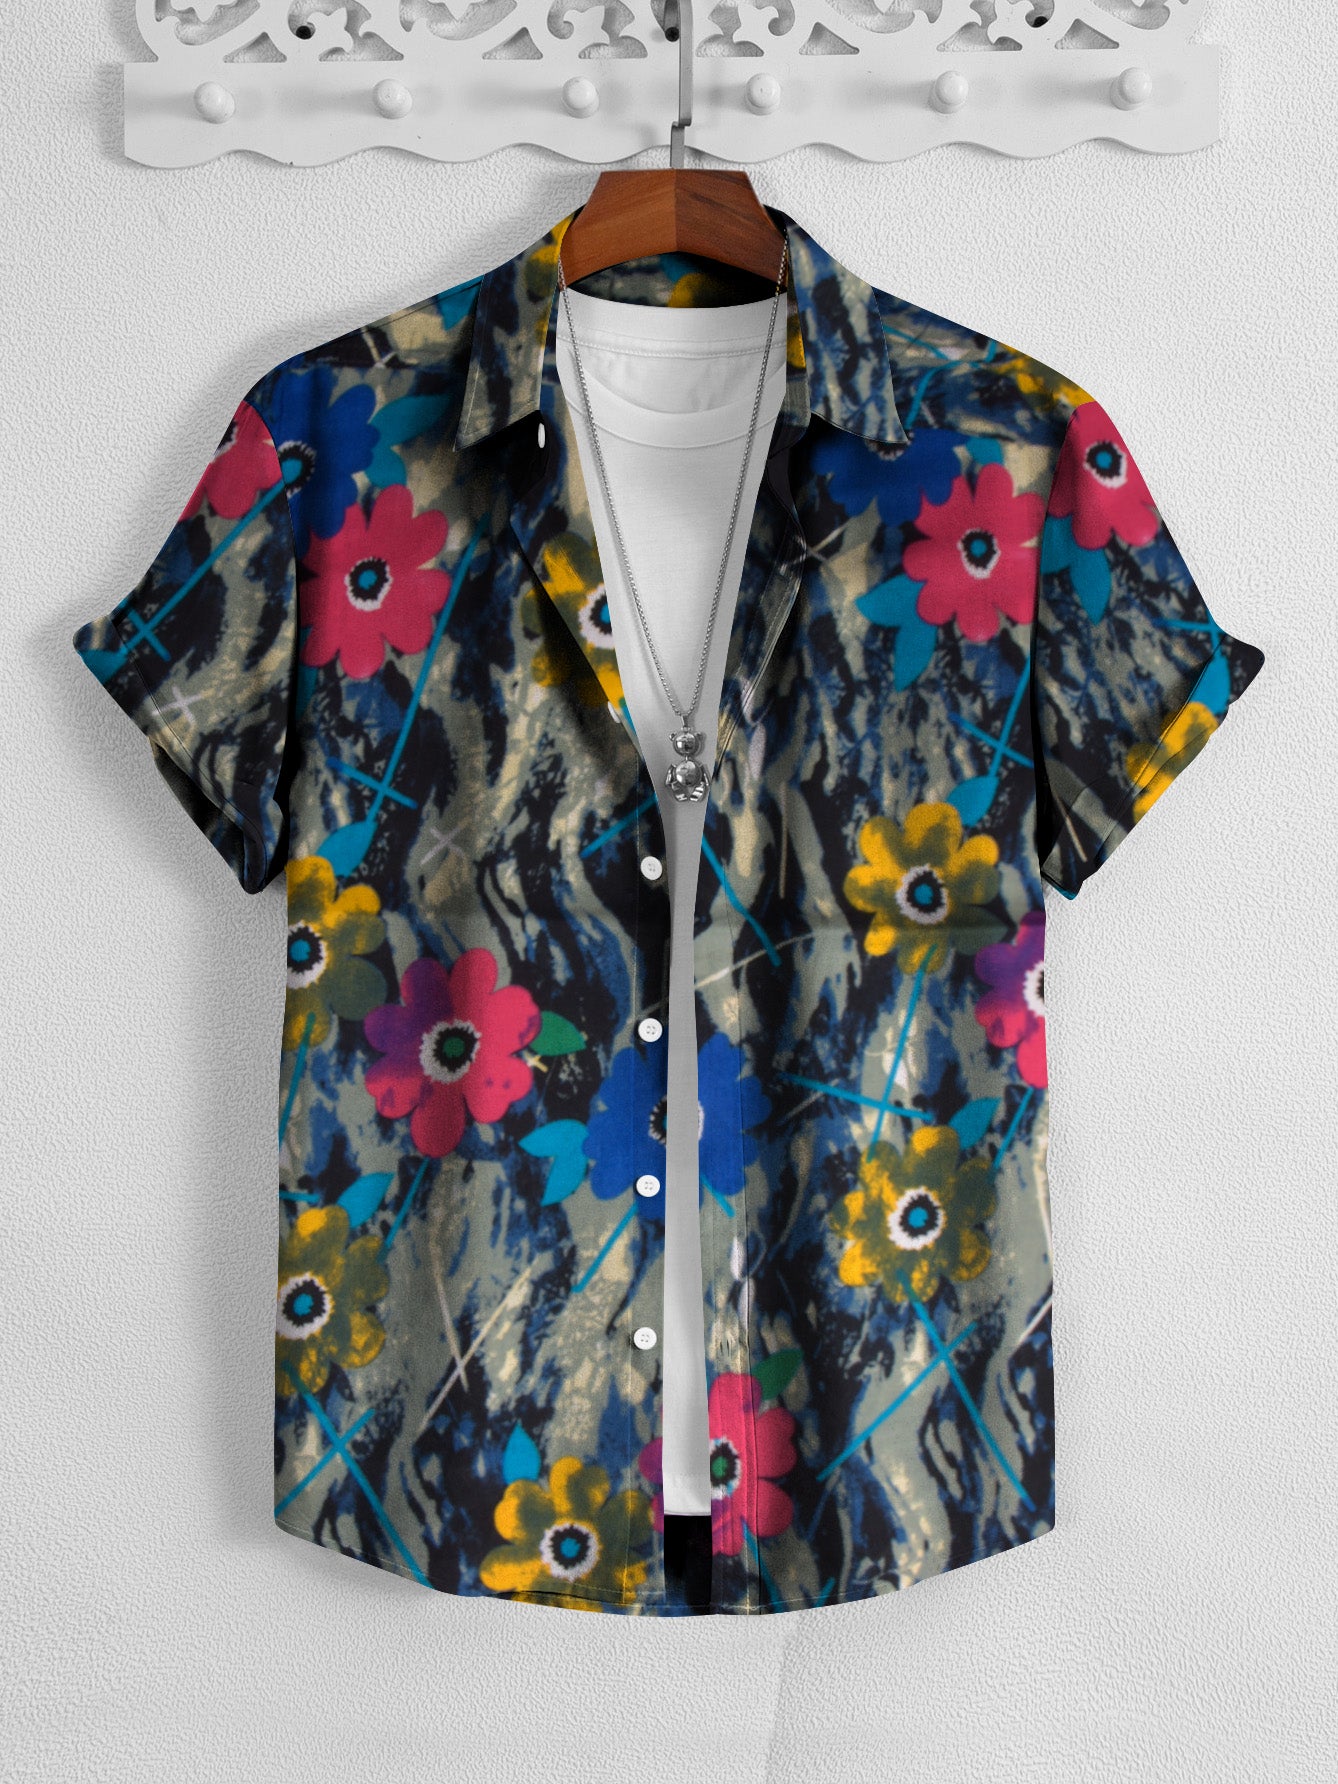 OXEN Premium Half Sleeve Slim Fit Casual Shirt For Men-Allover Print-SP2147